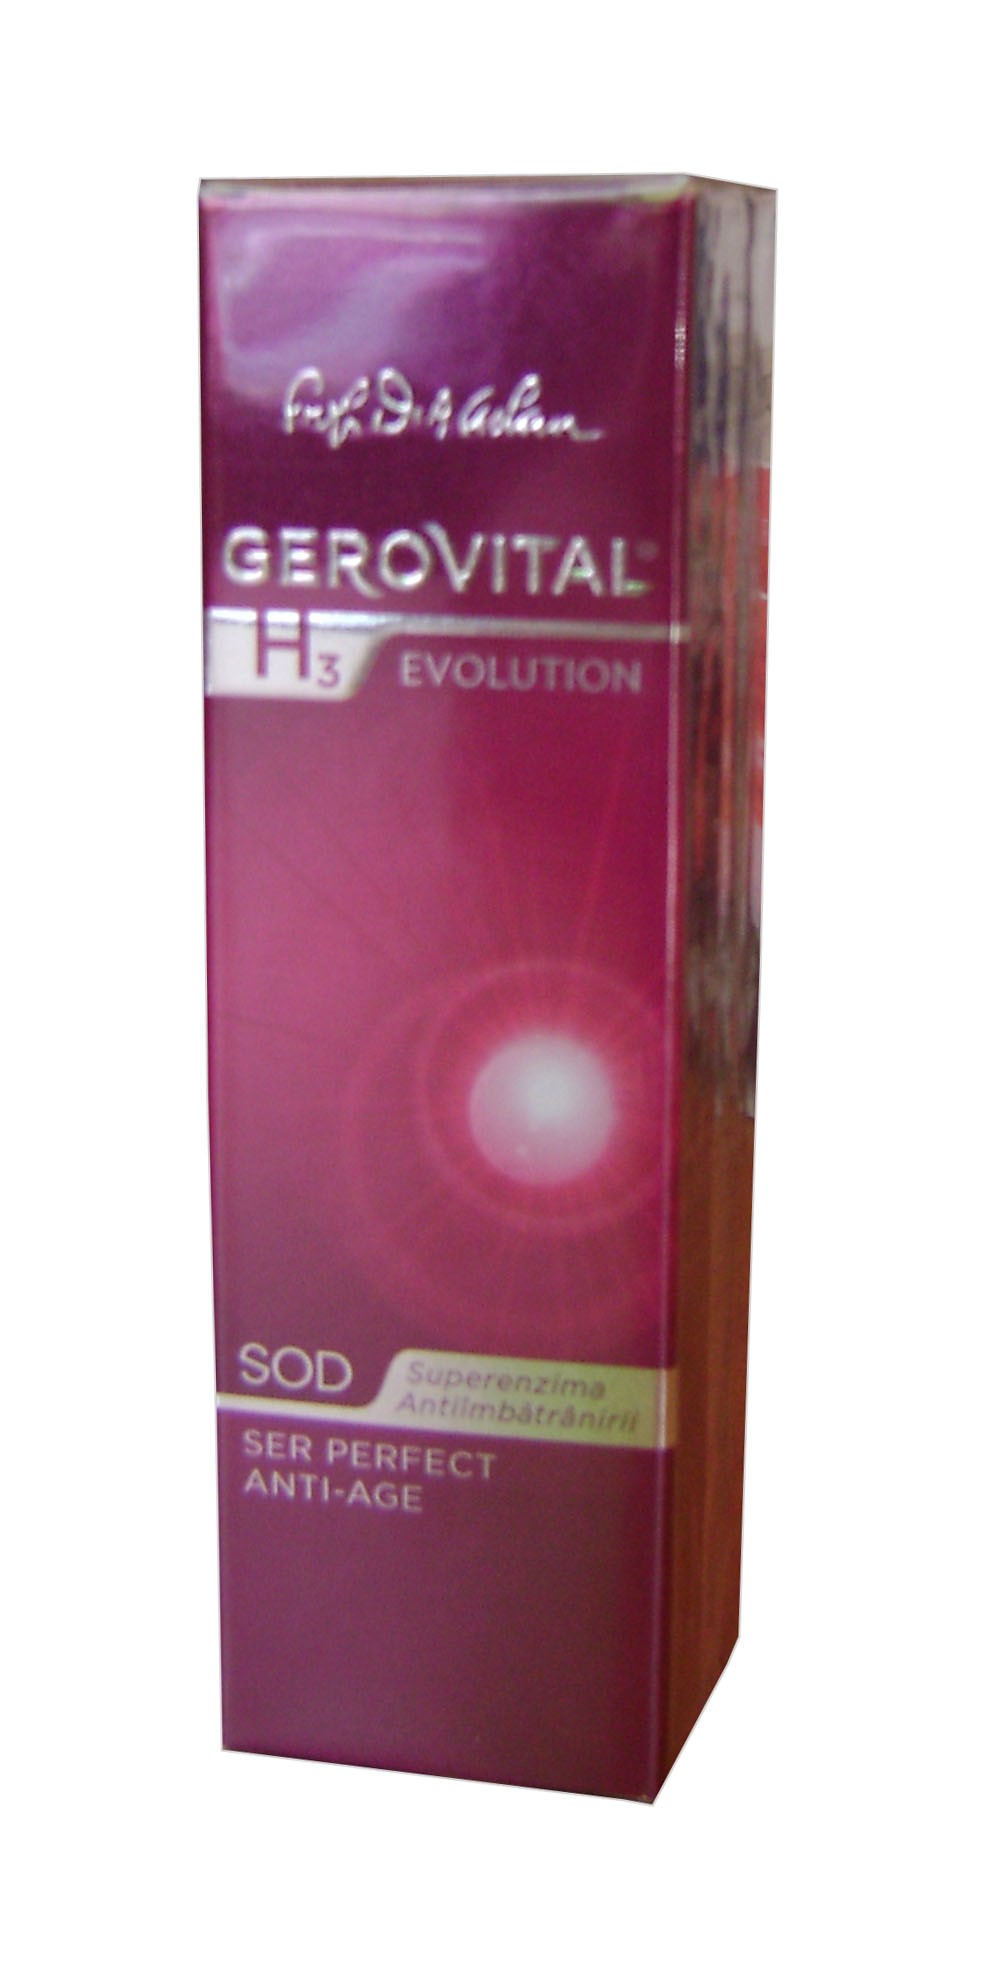 GEROVITAL H3 SER PERFECT ANTI AGE